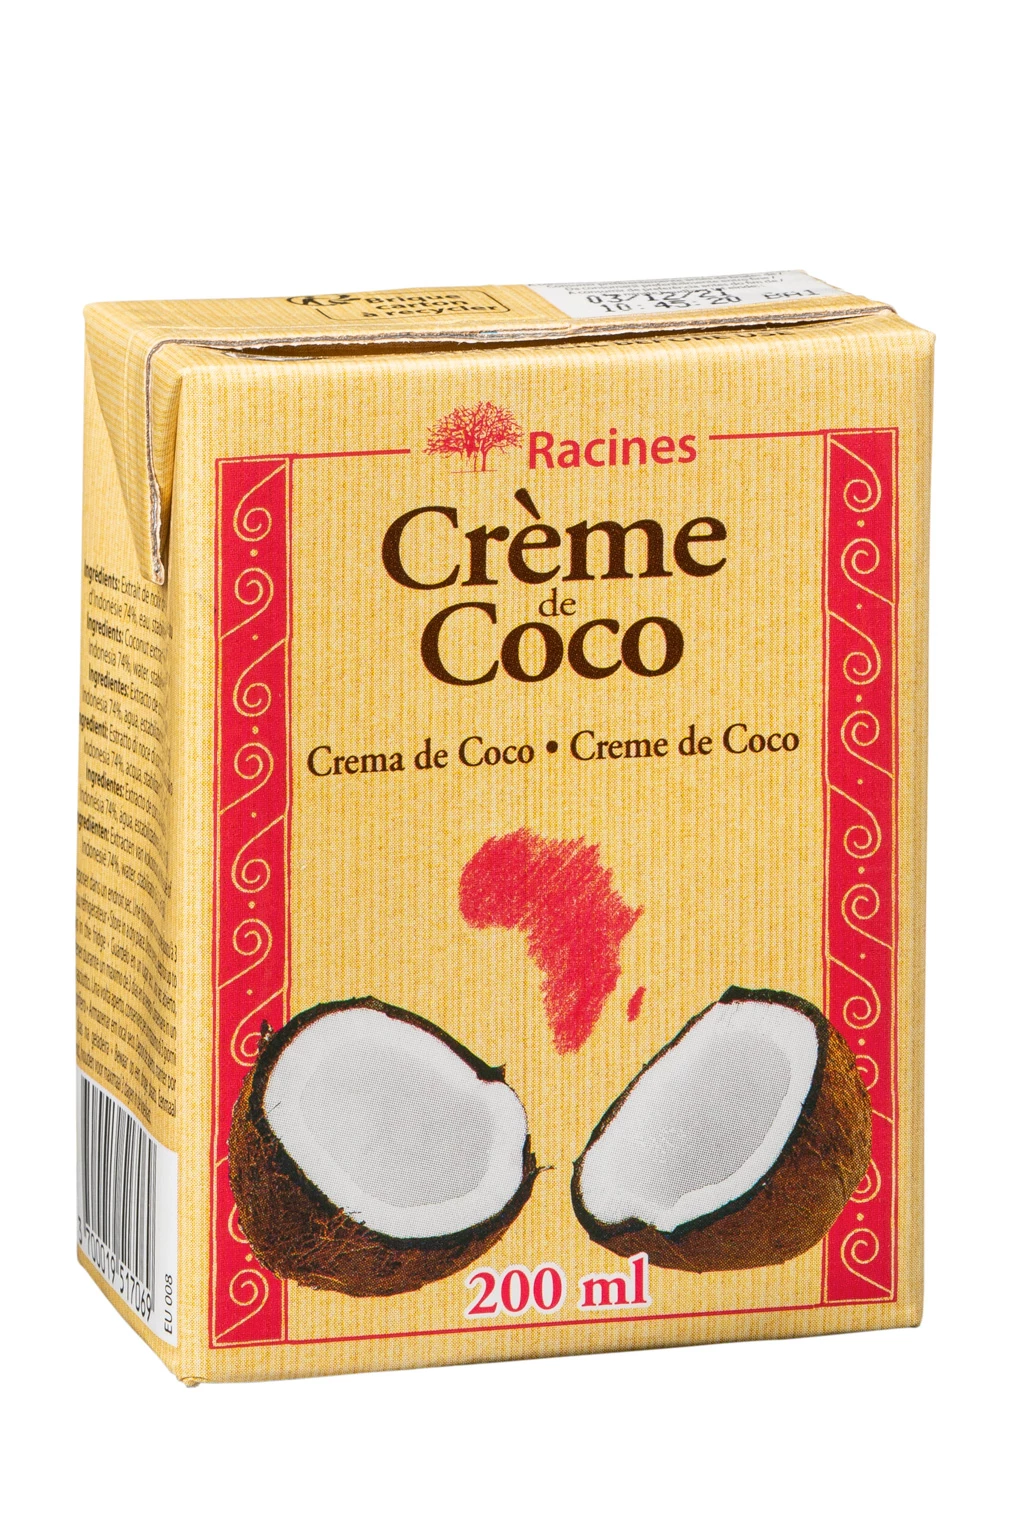 Creme de Coco (24 X 200 Ml) Tetrapack - Racines